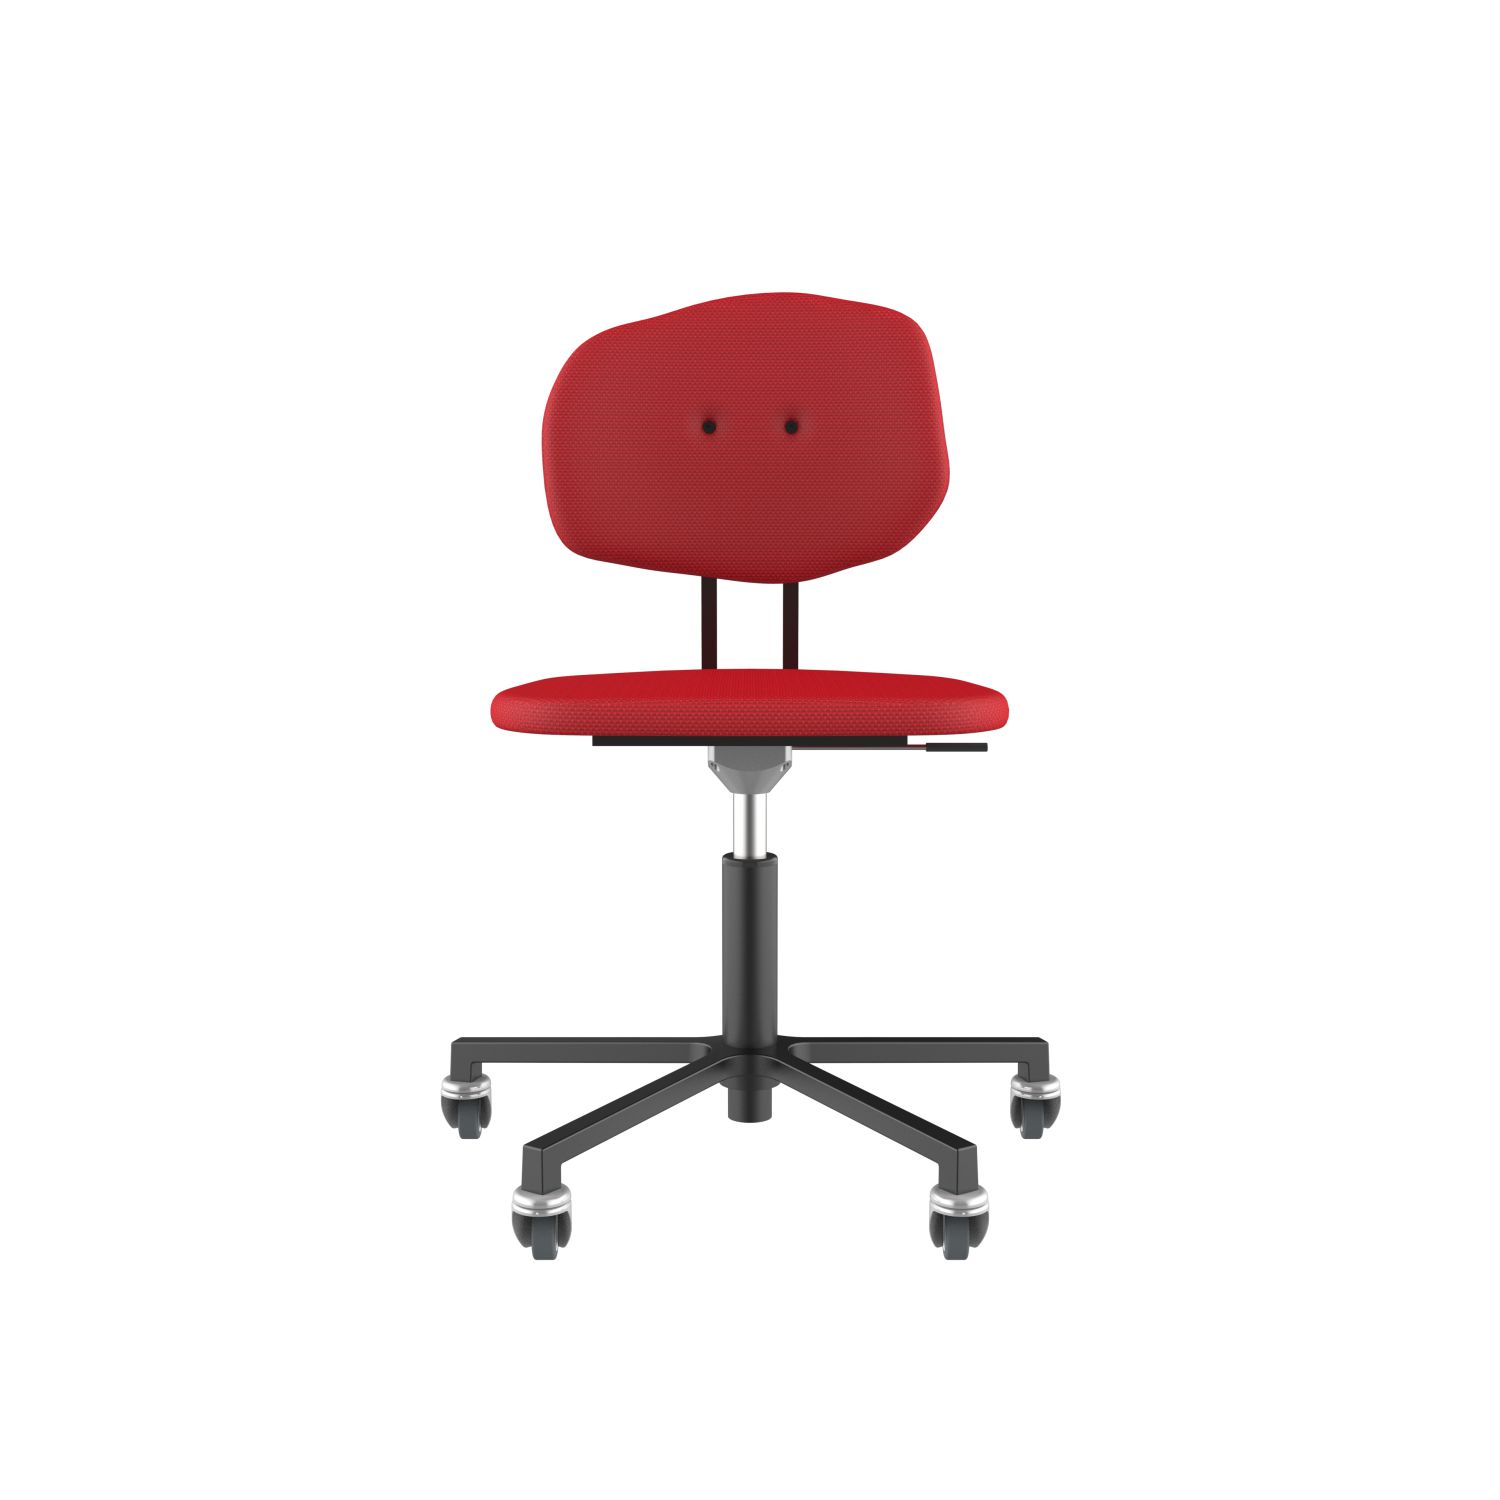 lensvelt maarten baas office chair without armrests backrest e grenada red 010 black ral9005 soft wheels